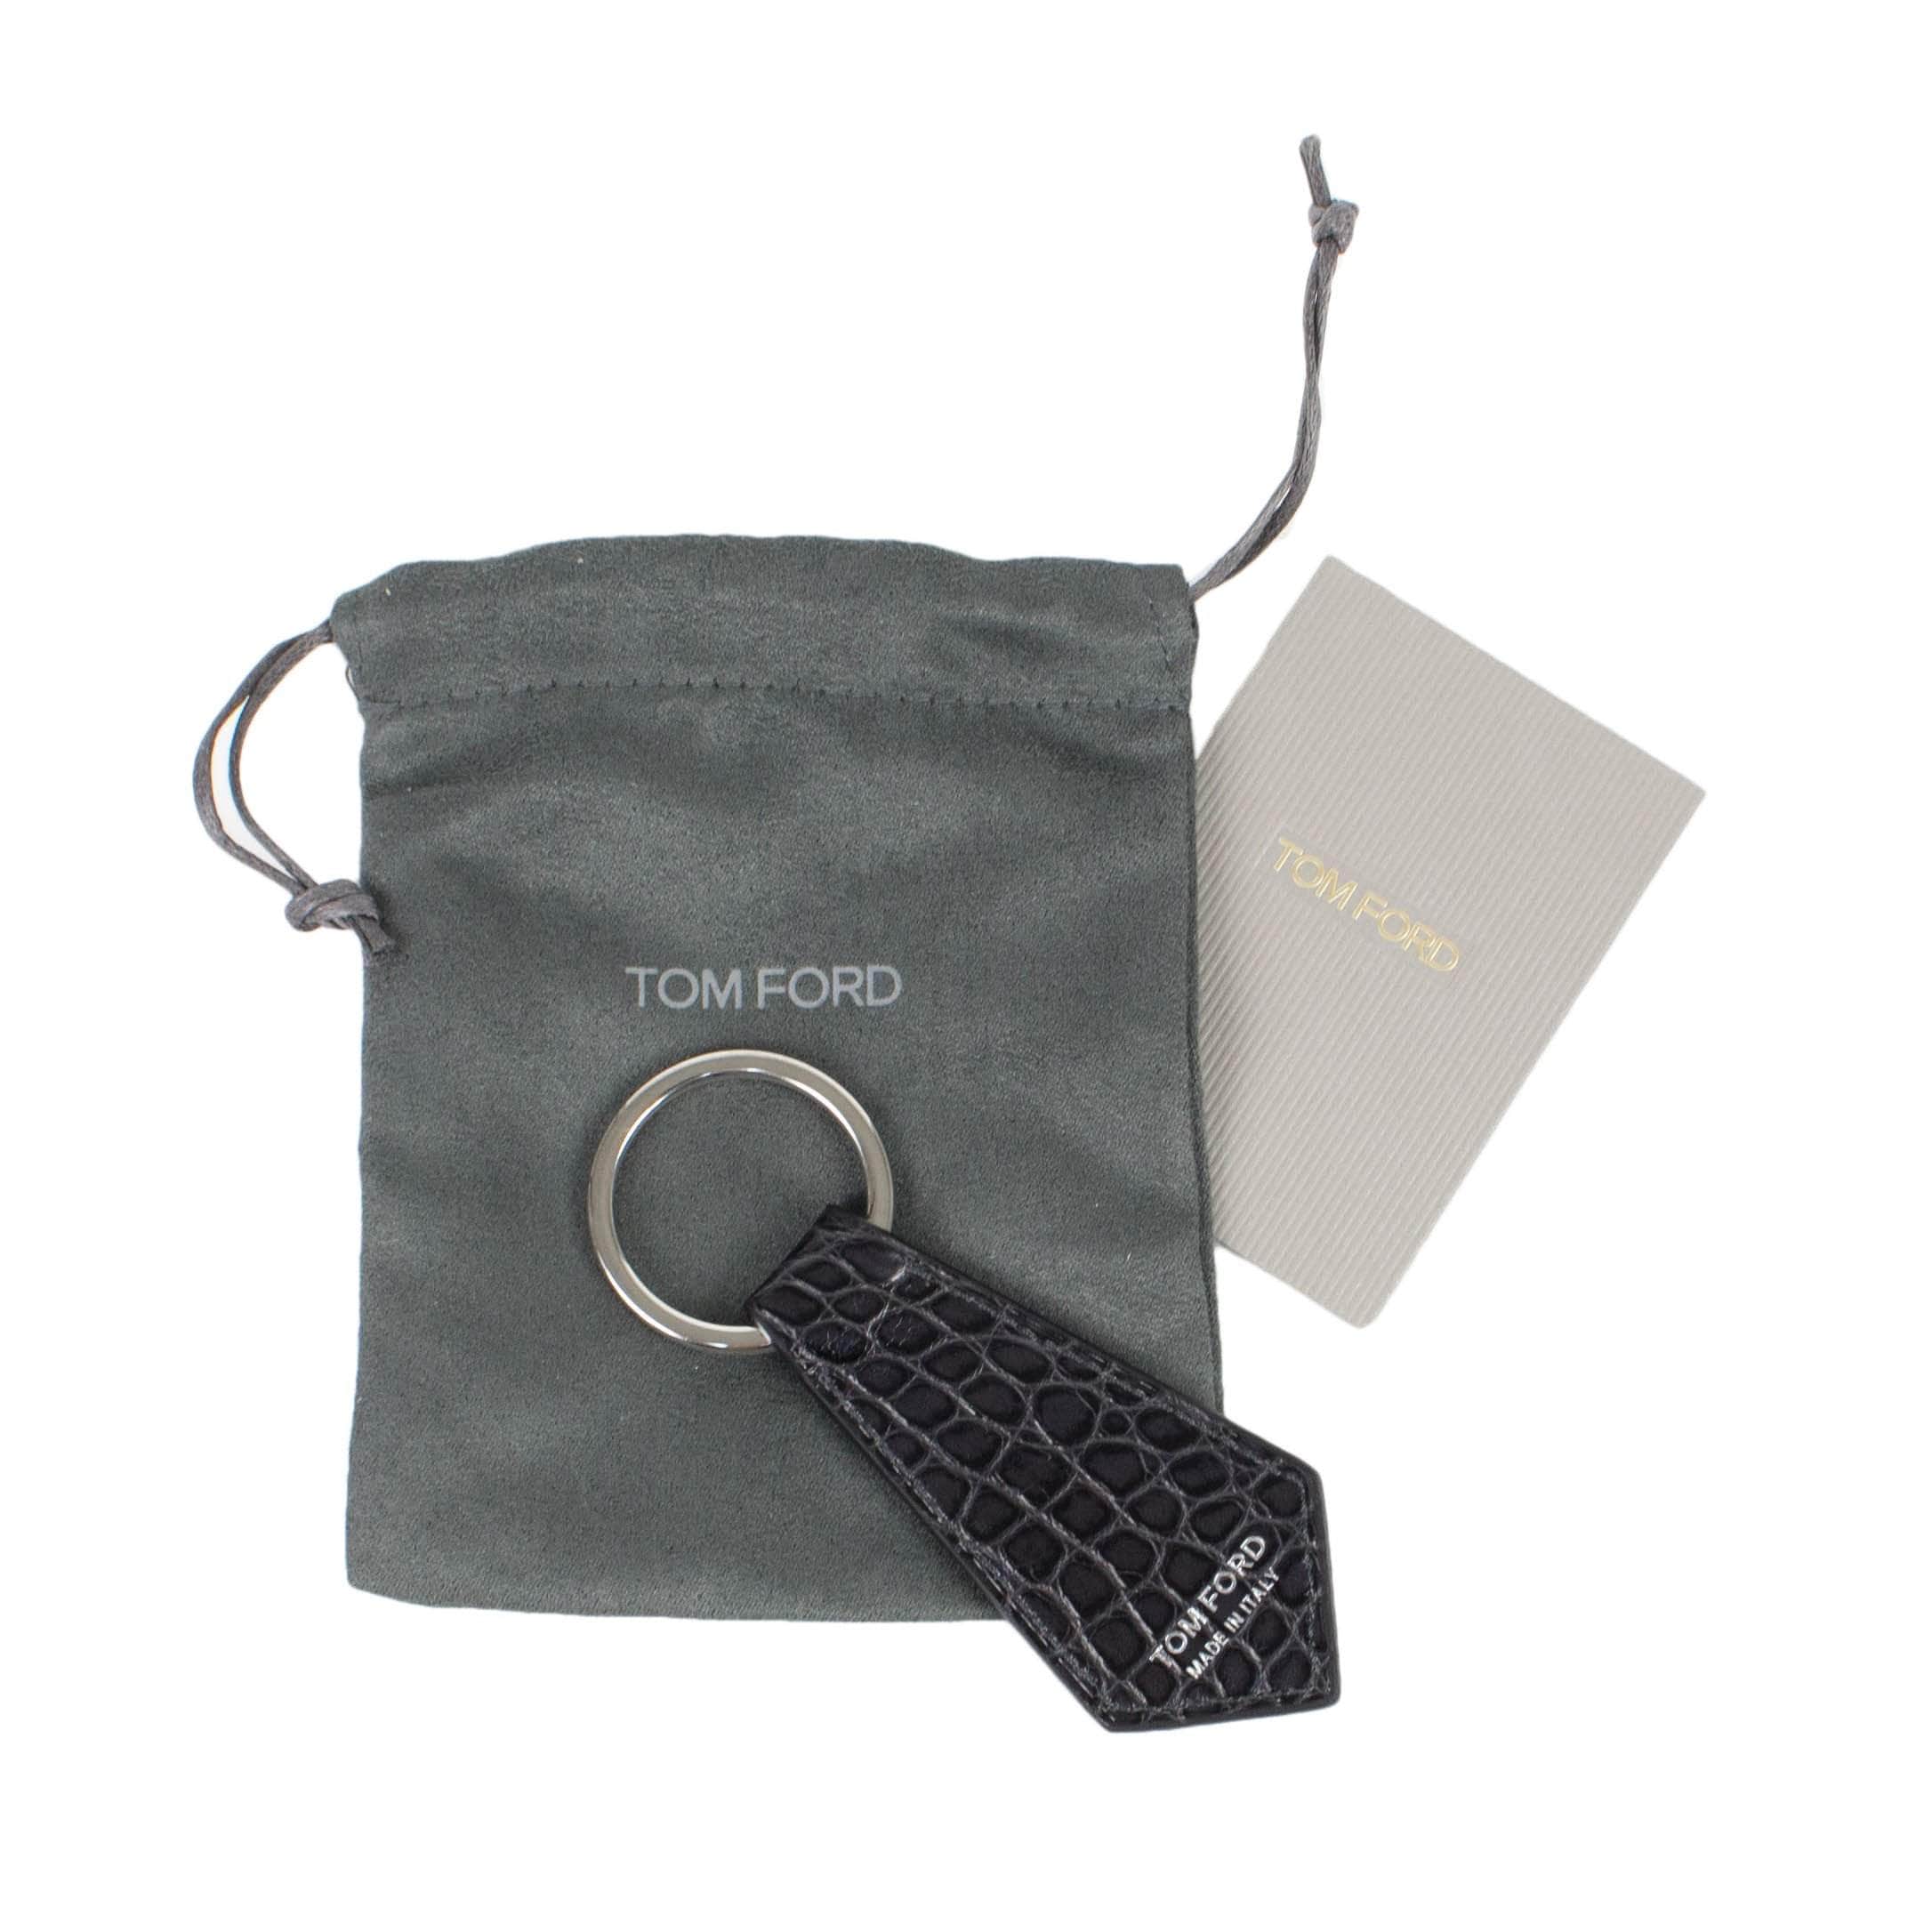 Tom Ford Keychains Tom Ford Men's Alligator Leather Key Chain